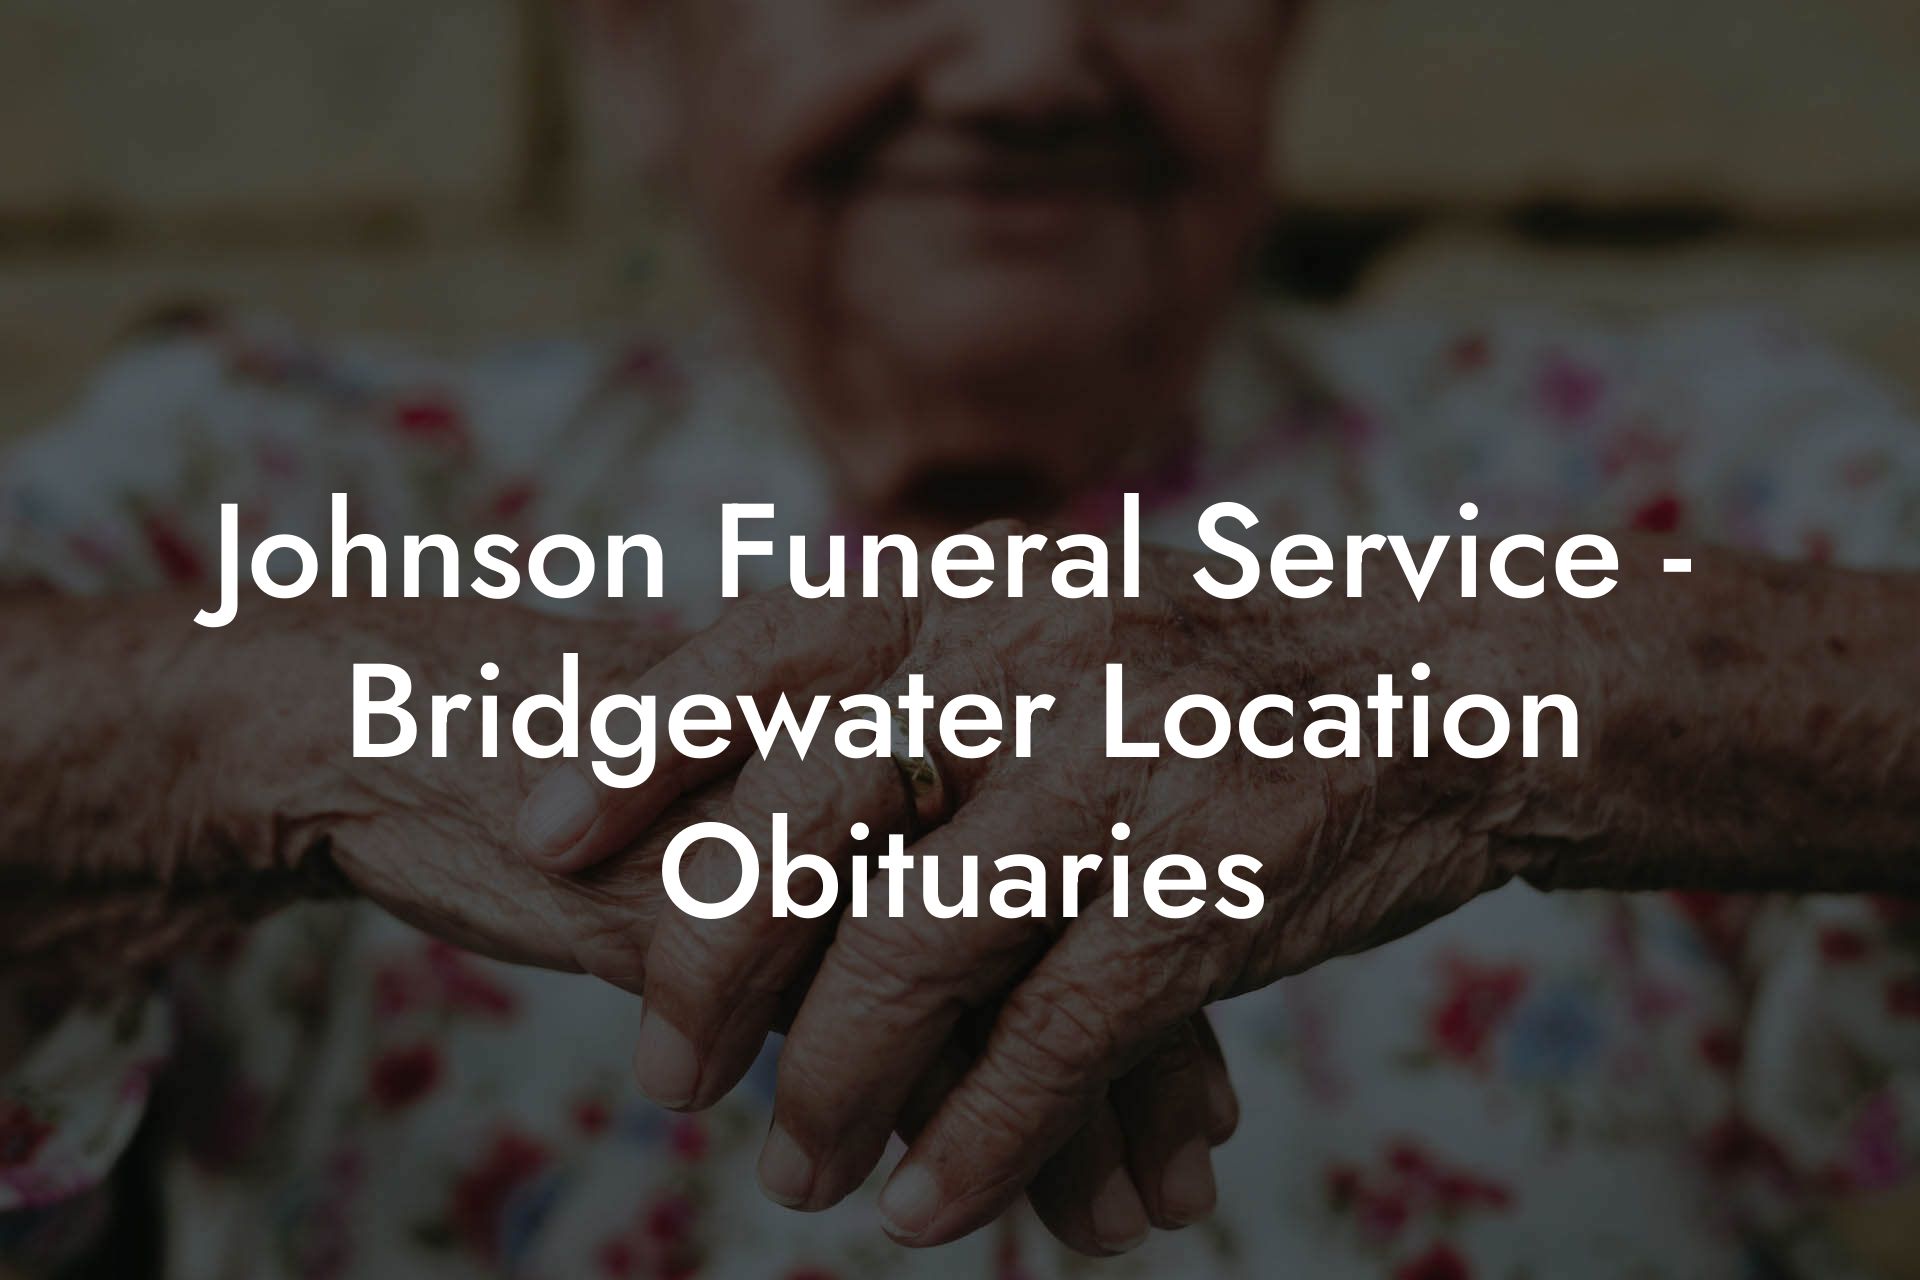 Johnson Funeral Service - Bridgewater Location Obituaries